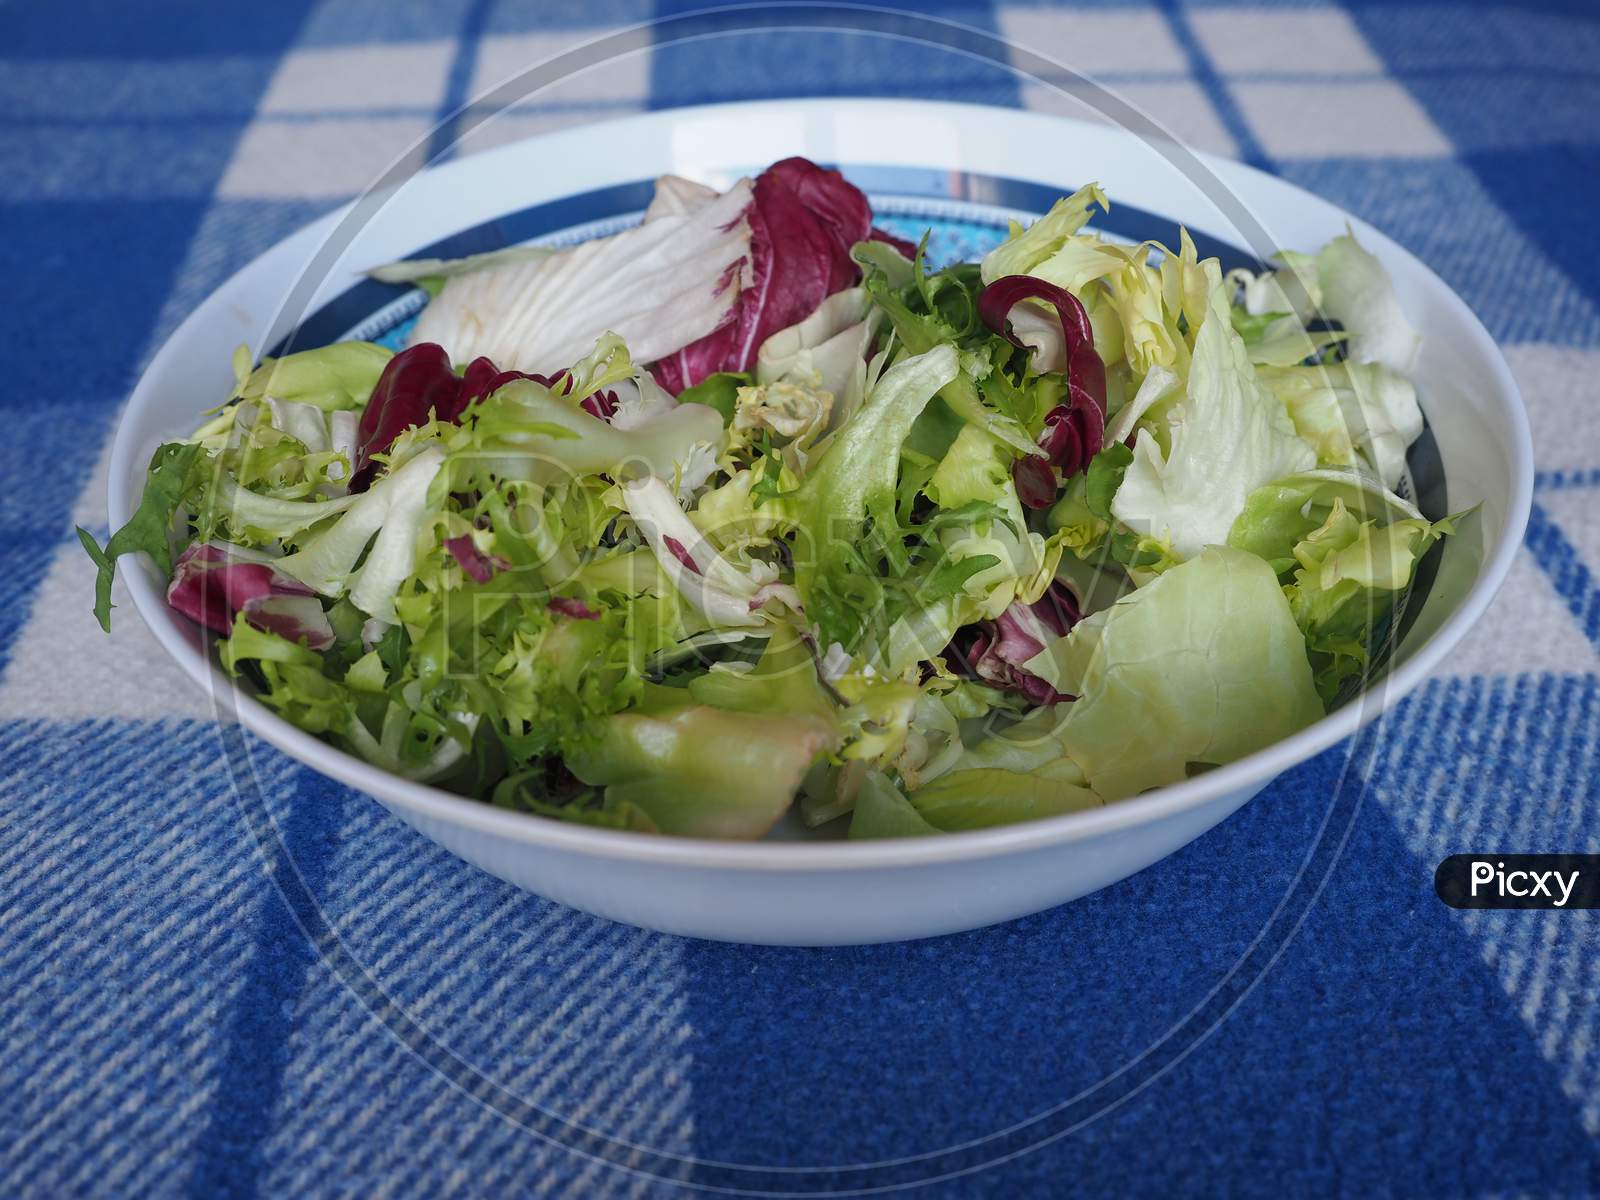 Mixed Leaf Salad